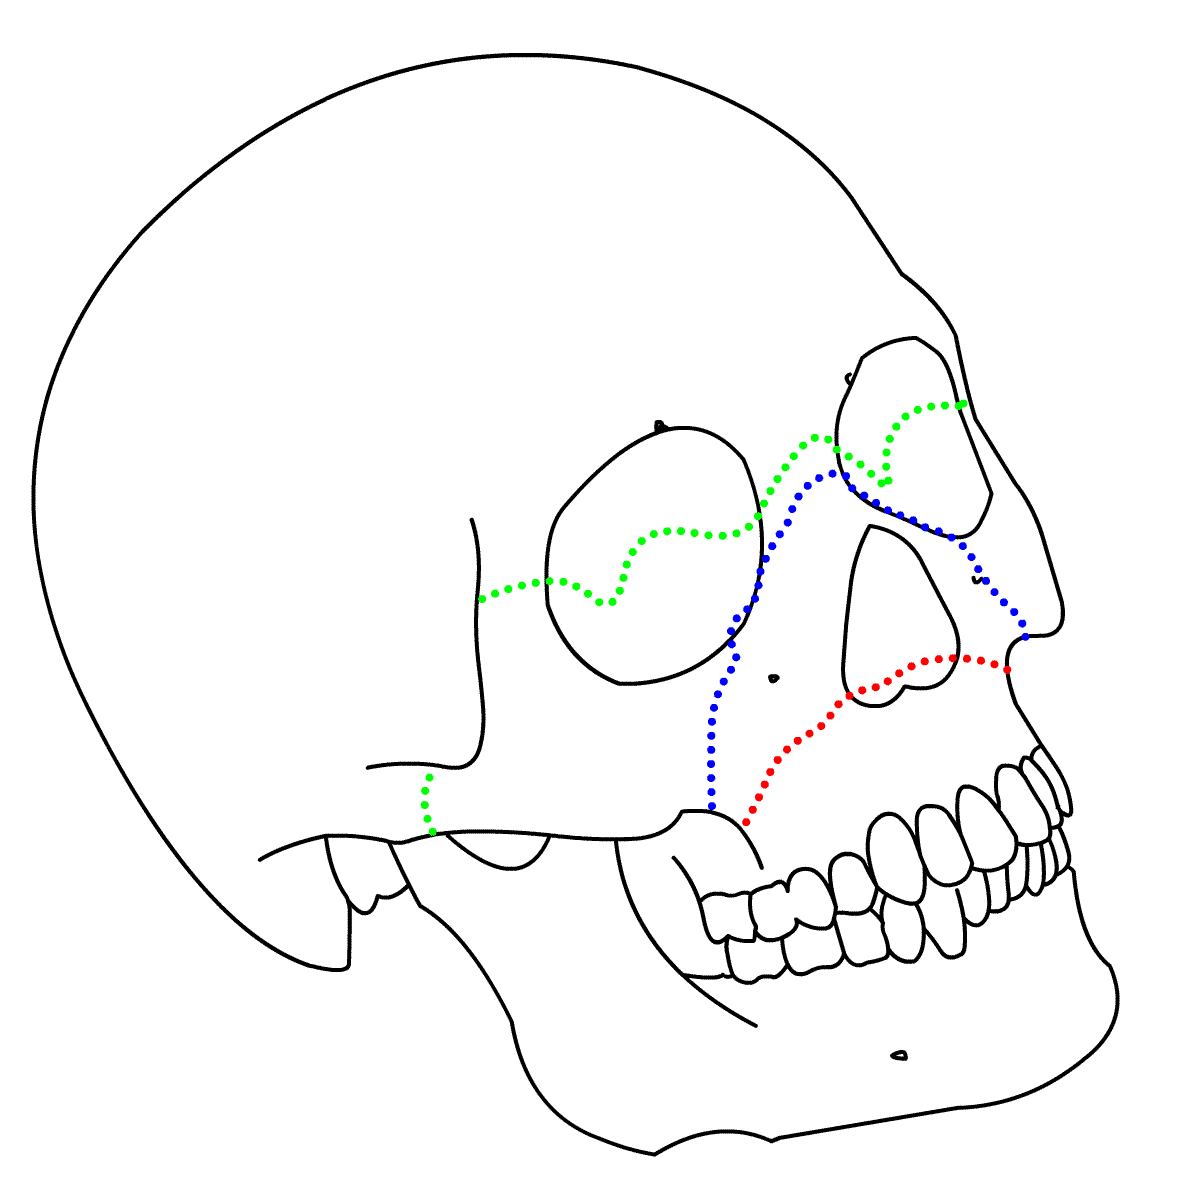 By 411 Advanced Human Anatomy Blog Neuroanatomy Post 6 The Skull